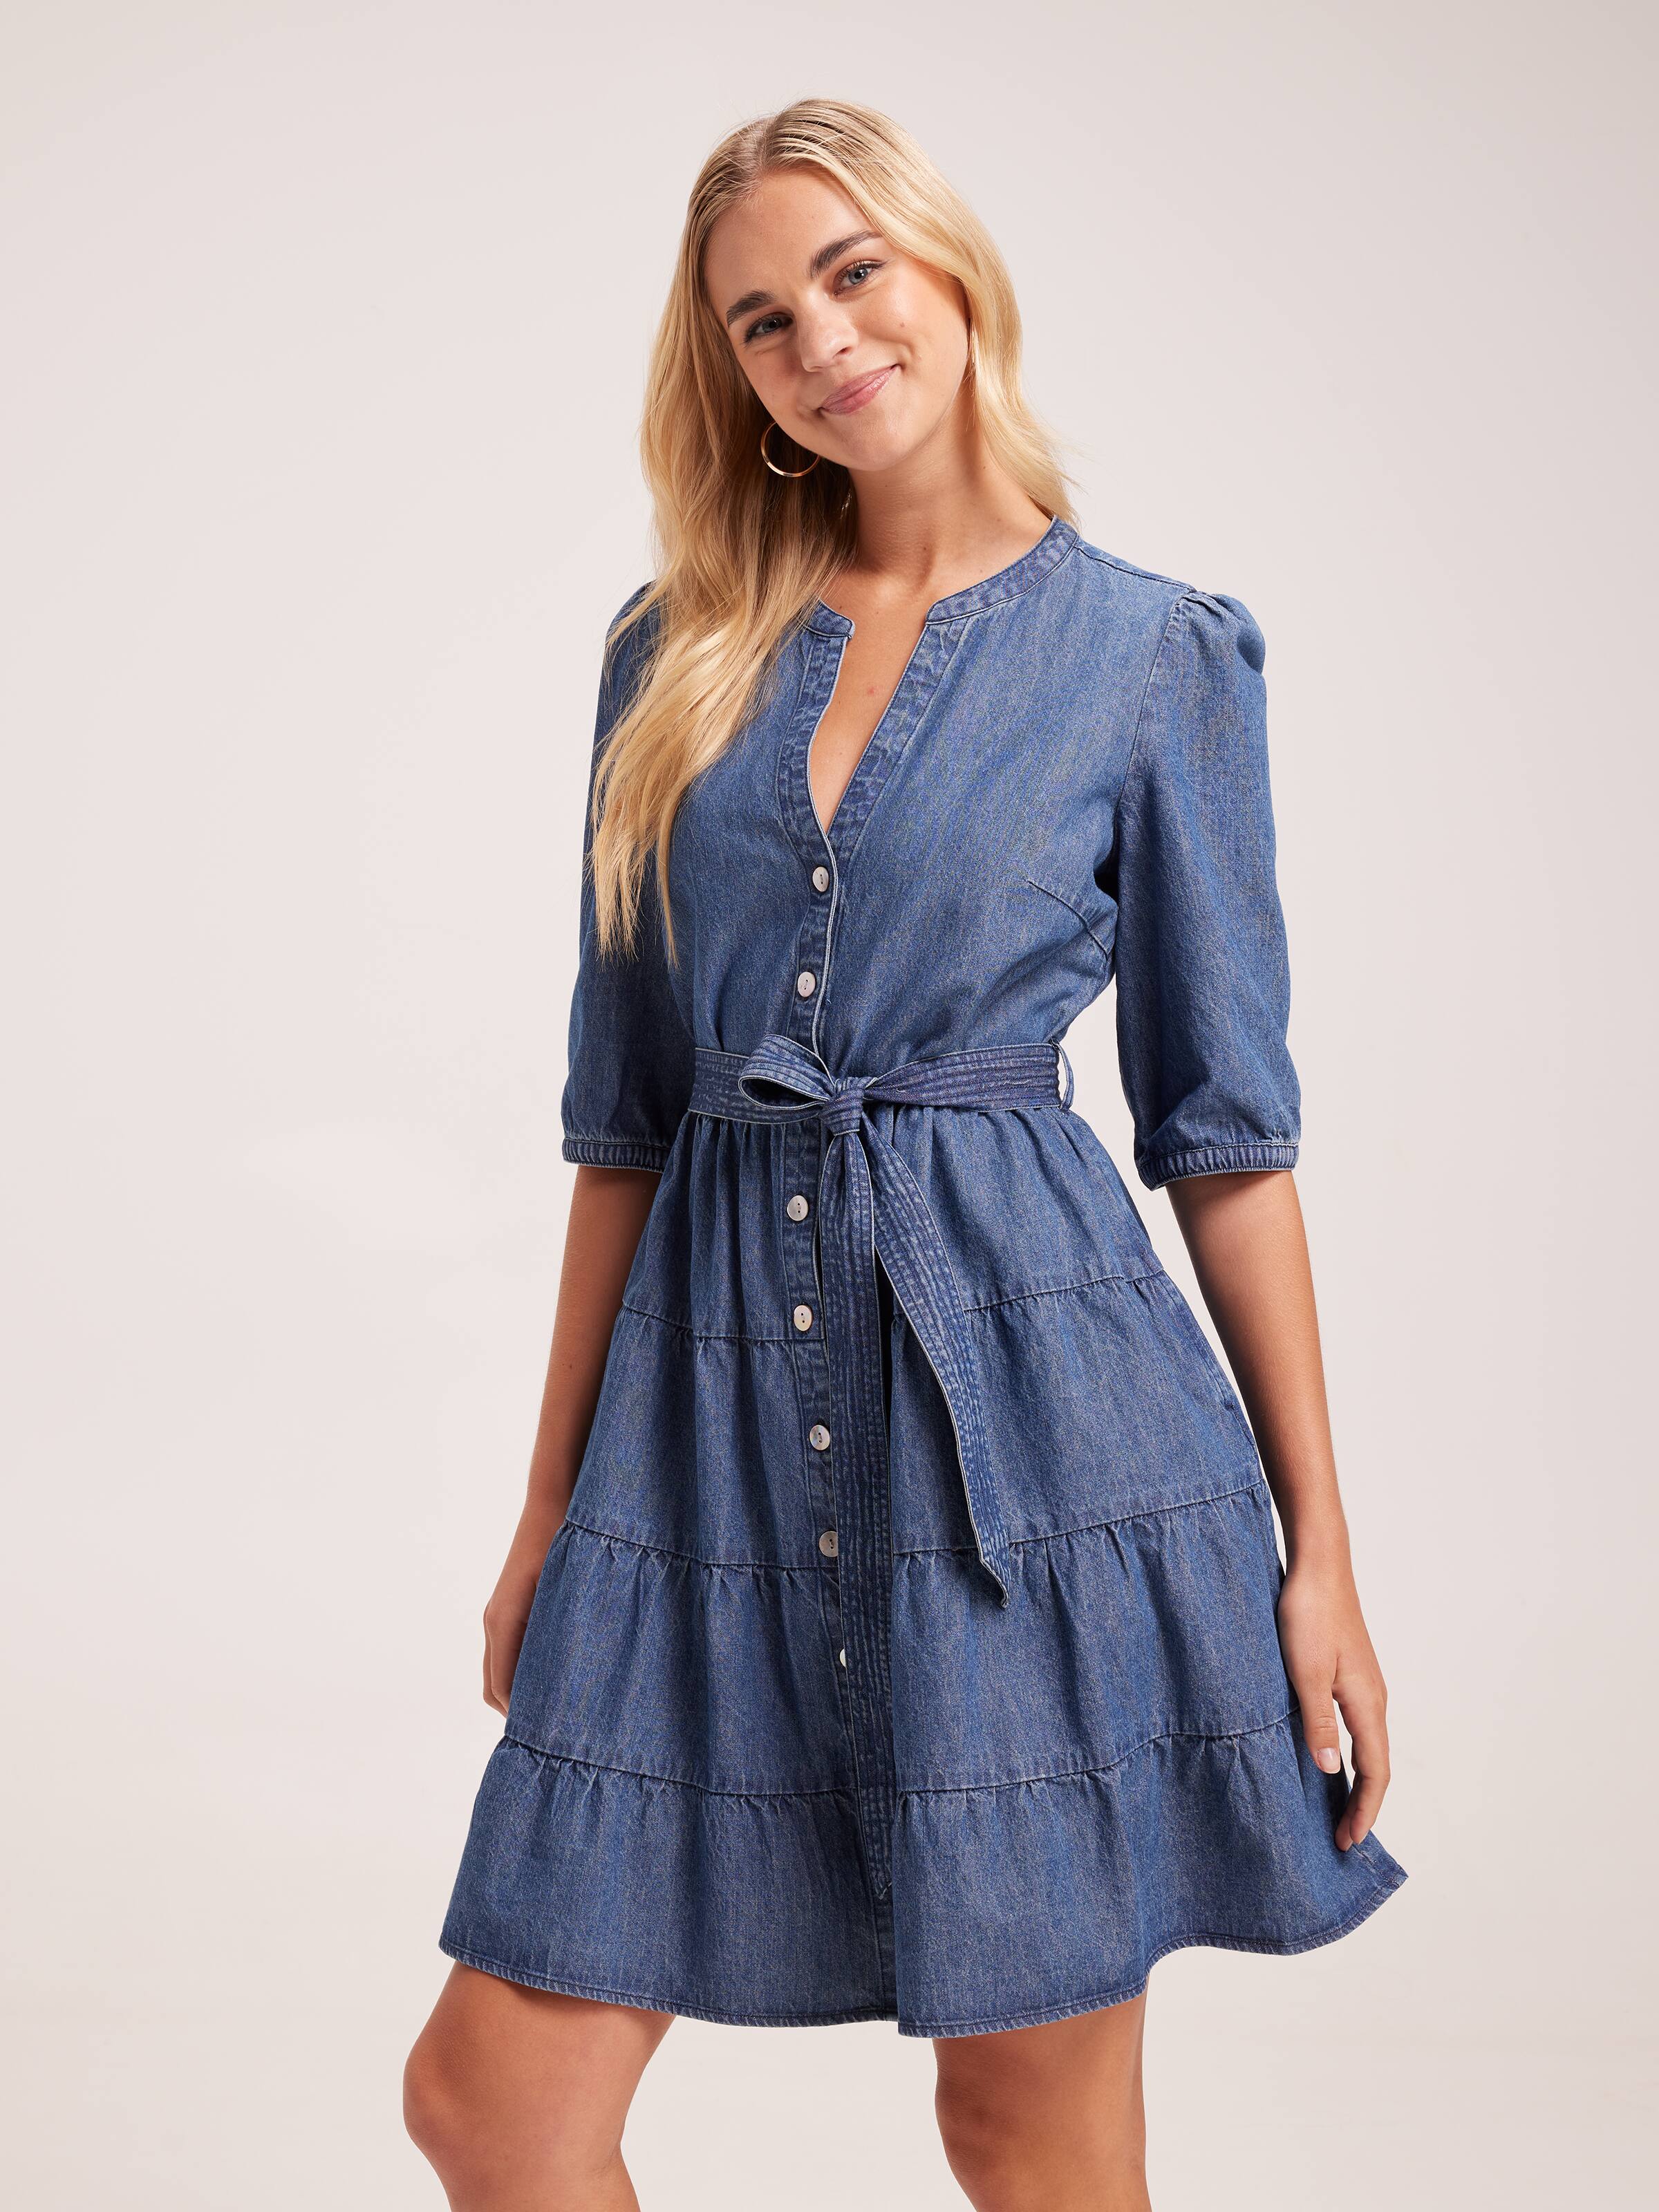 Syden Mini Dress - Overall Denim Dress in Sunday Blue